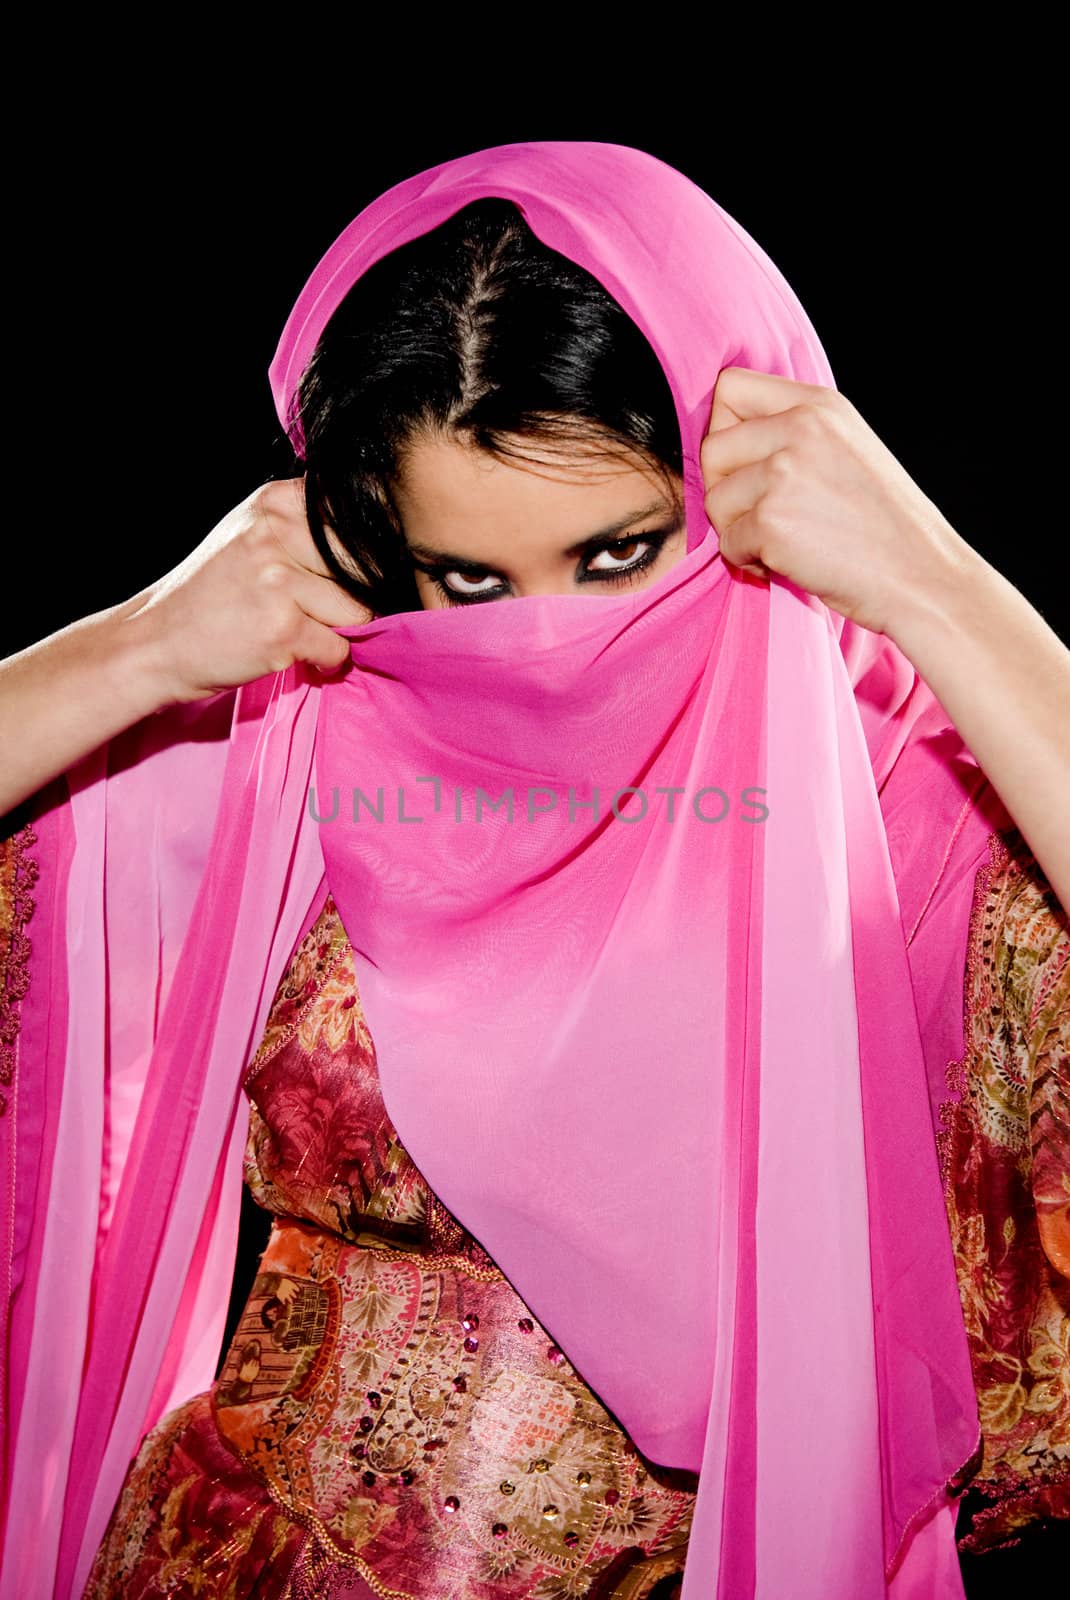 Arabian girl by dgmata